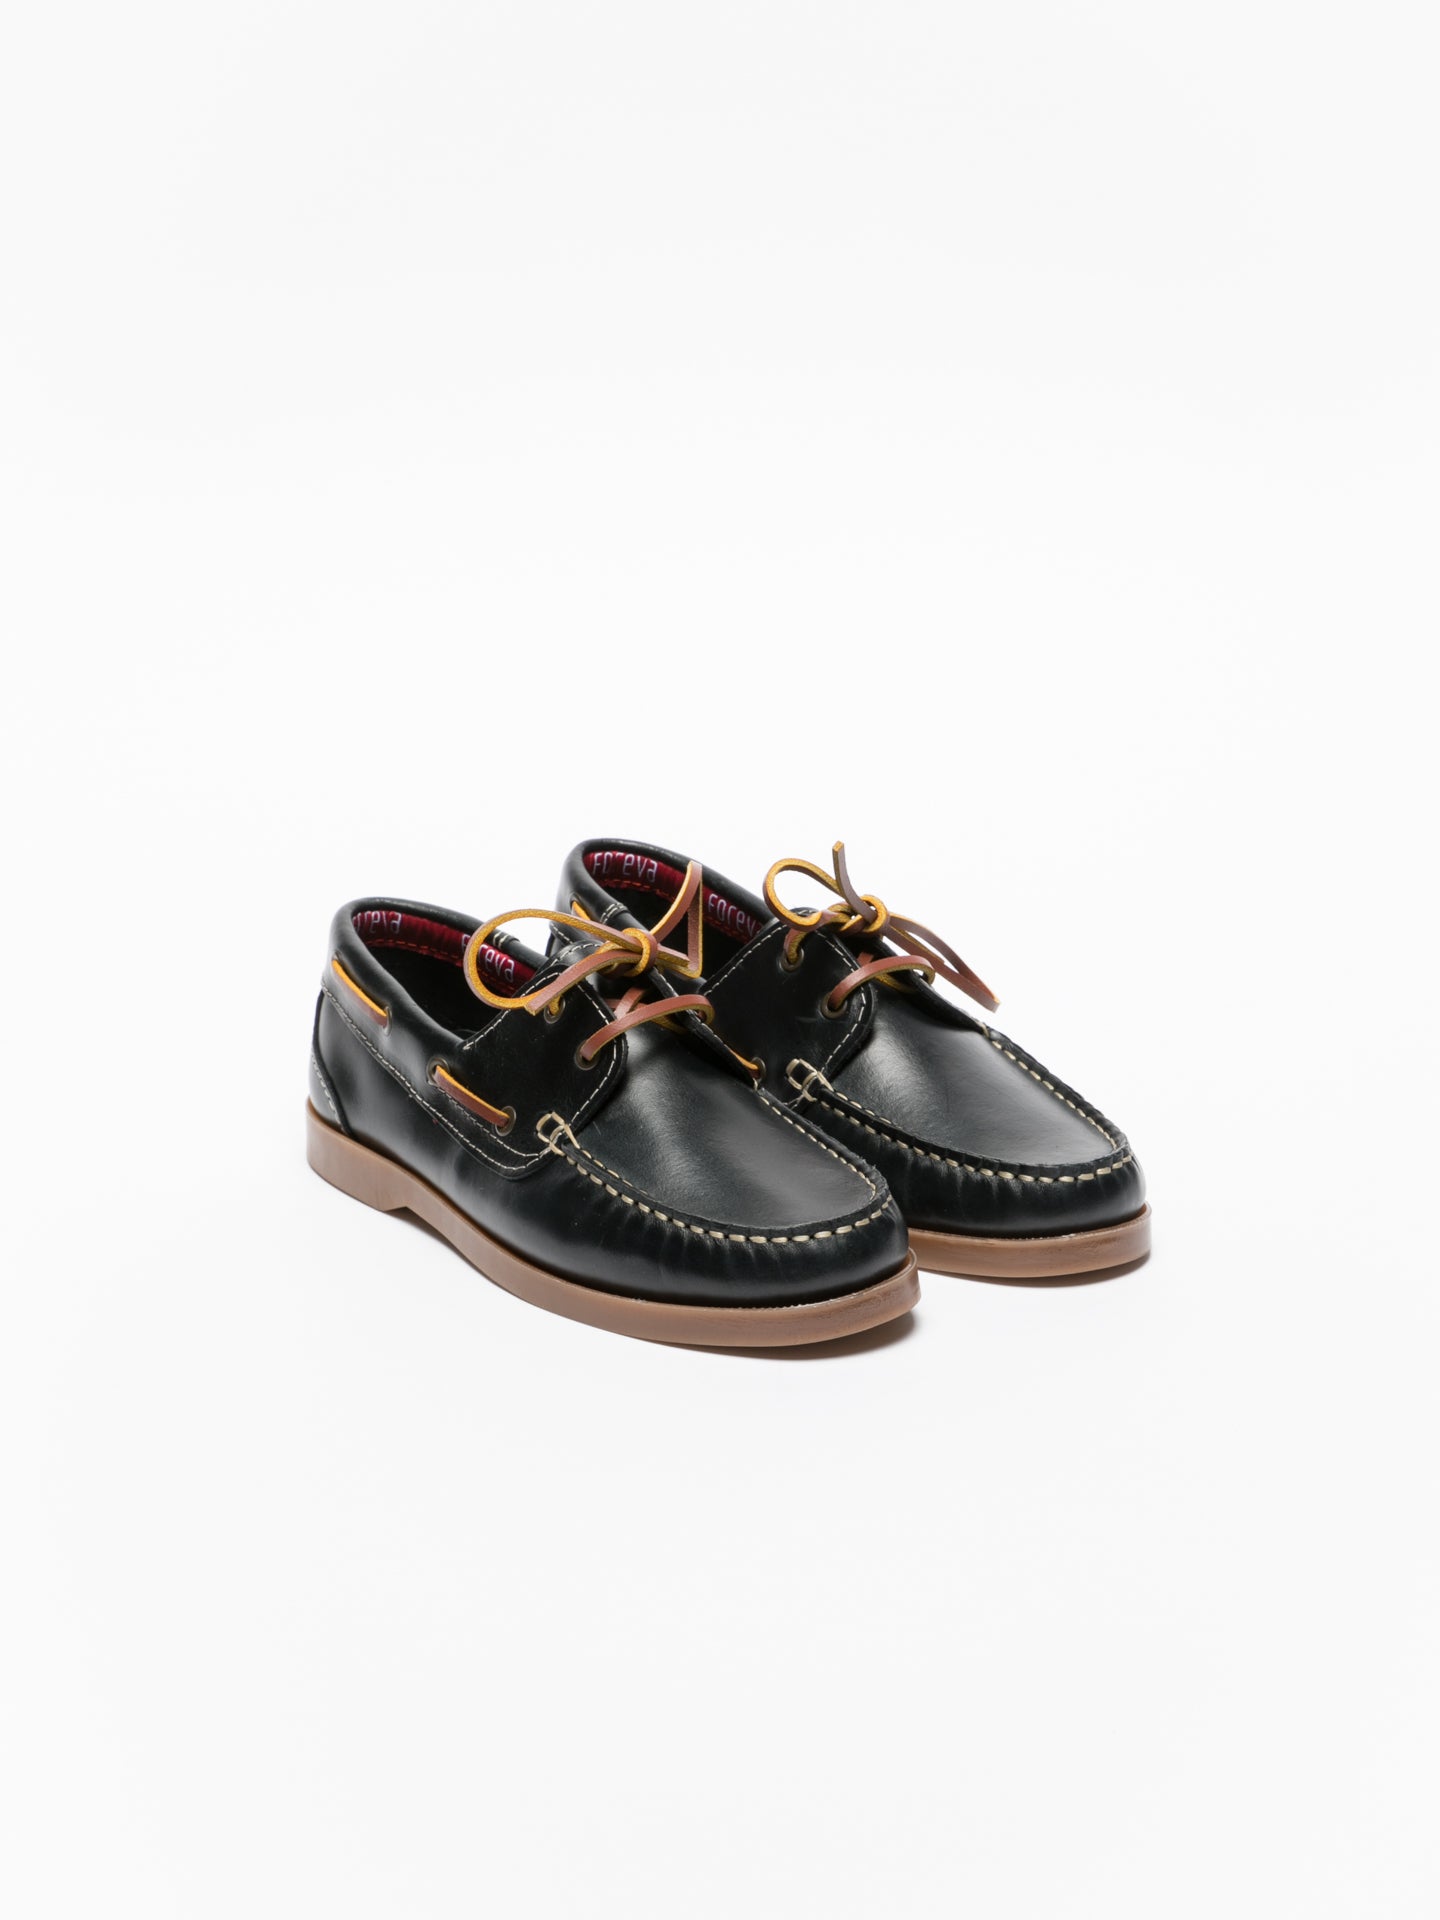 Foreva Navy Nautical Shoes